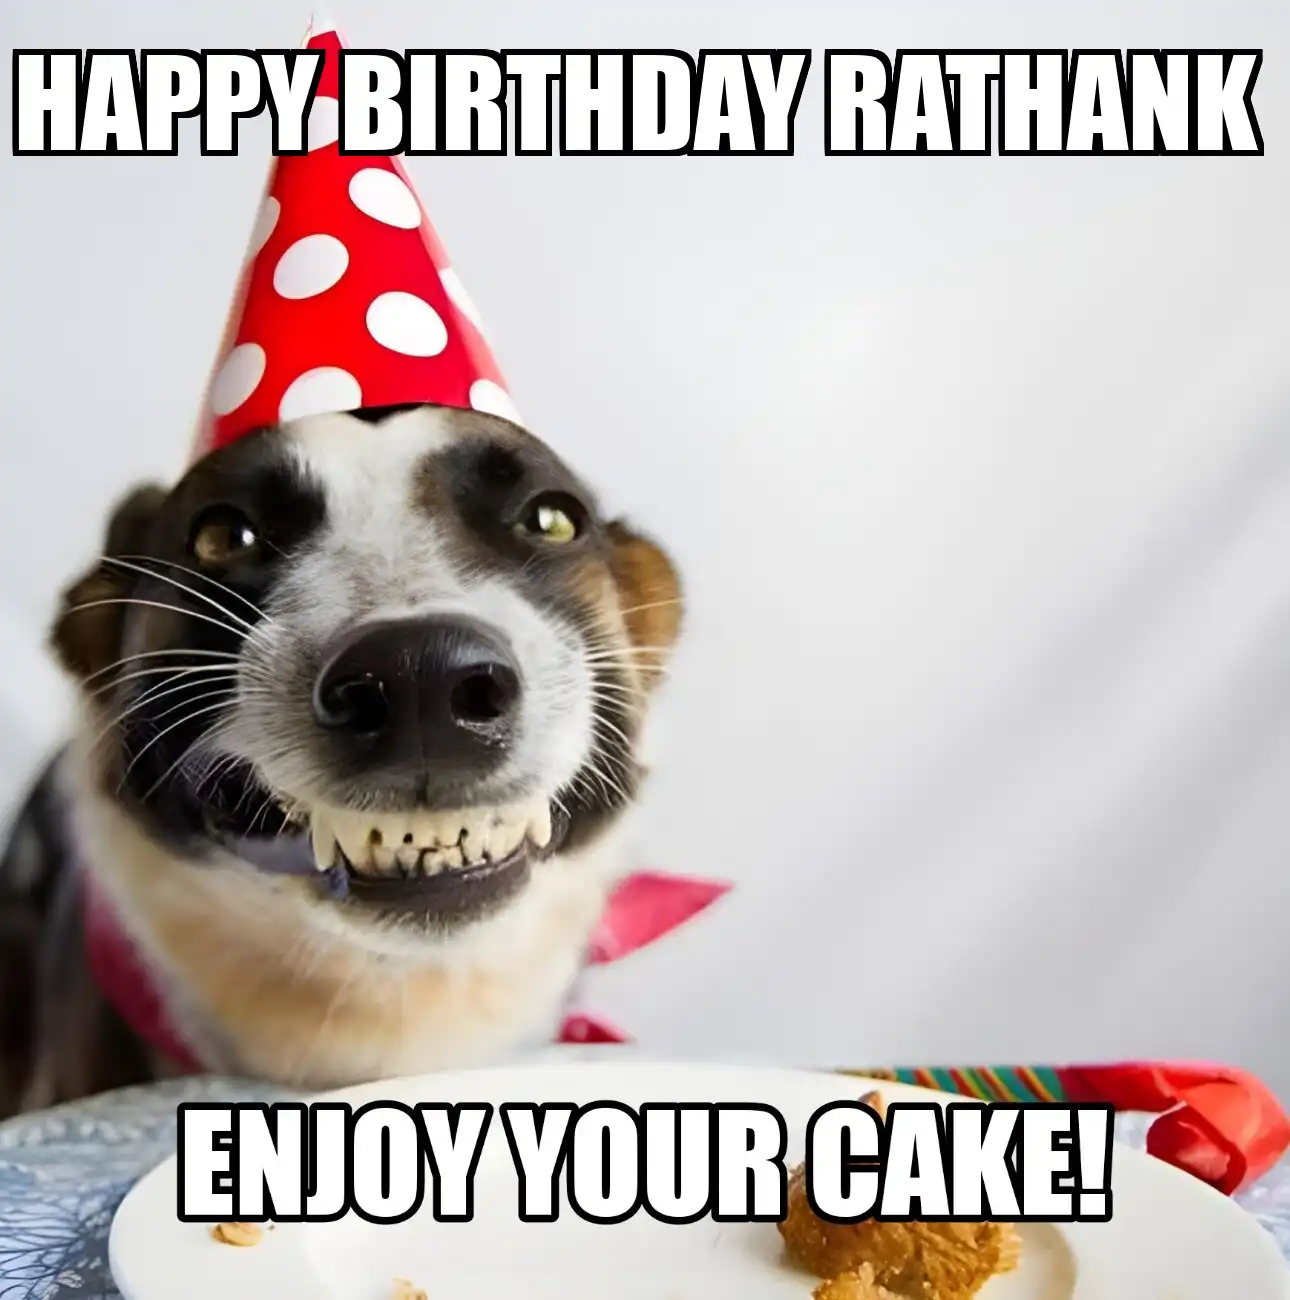 Happy Birthday Rathank Enjoy Your Cake Dog Meme